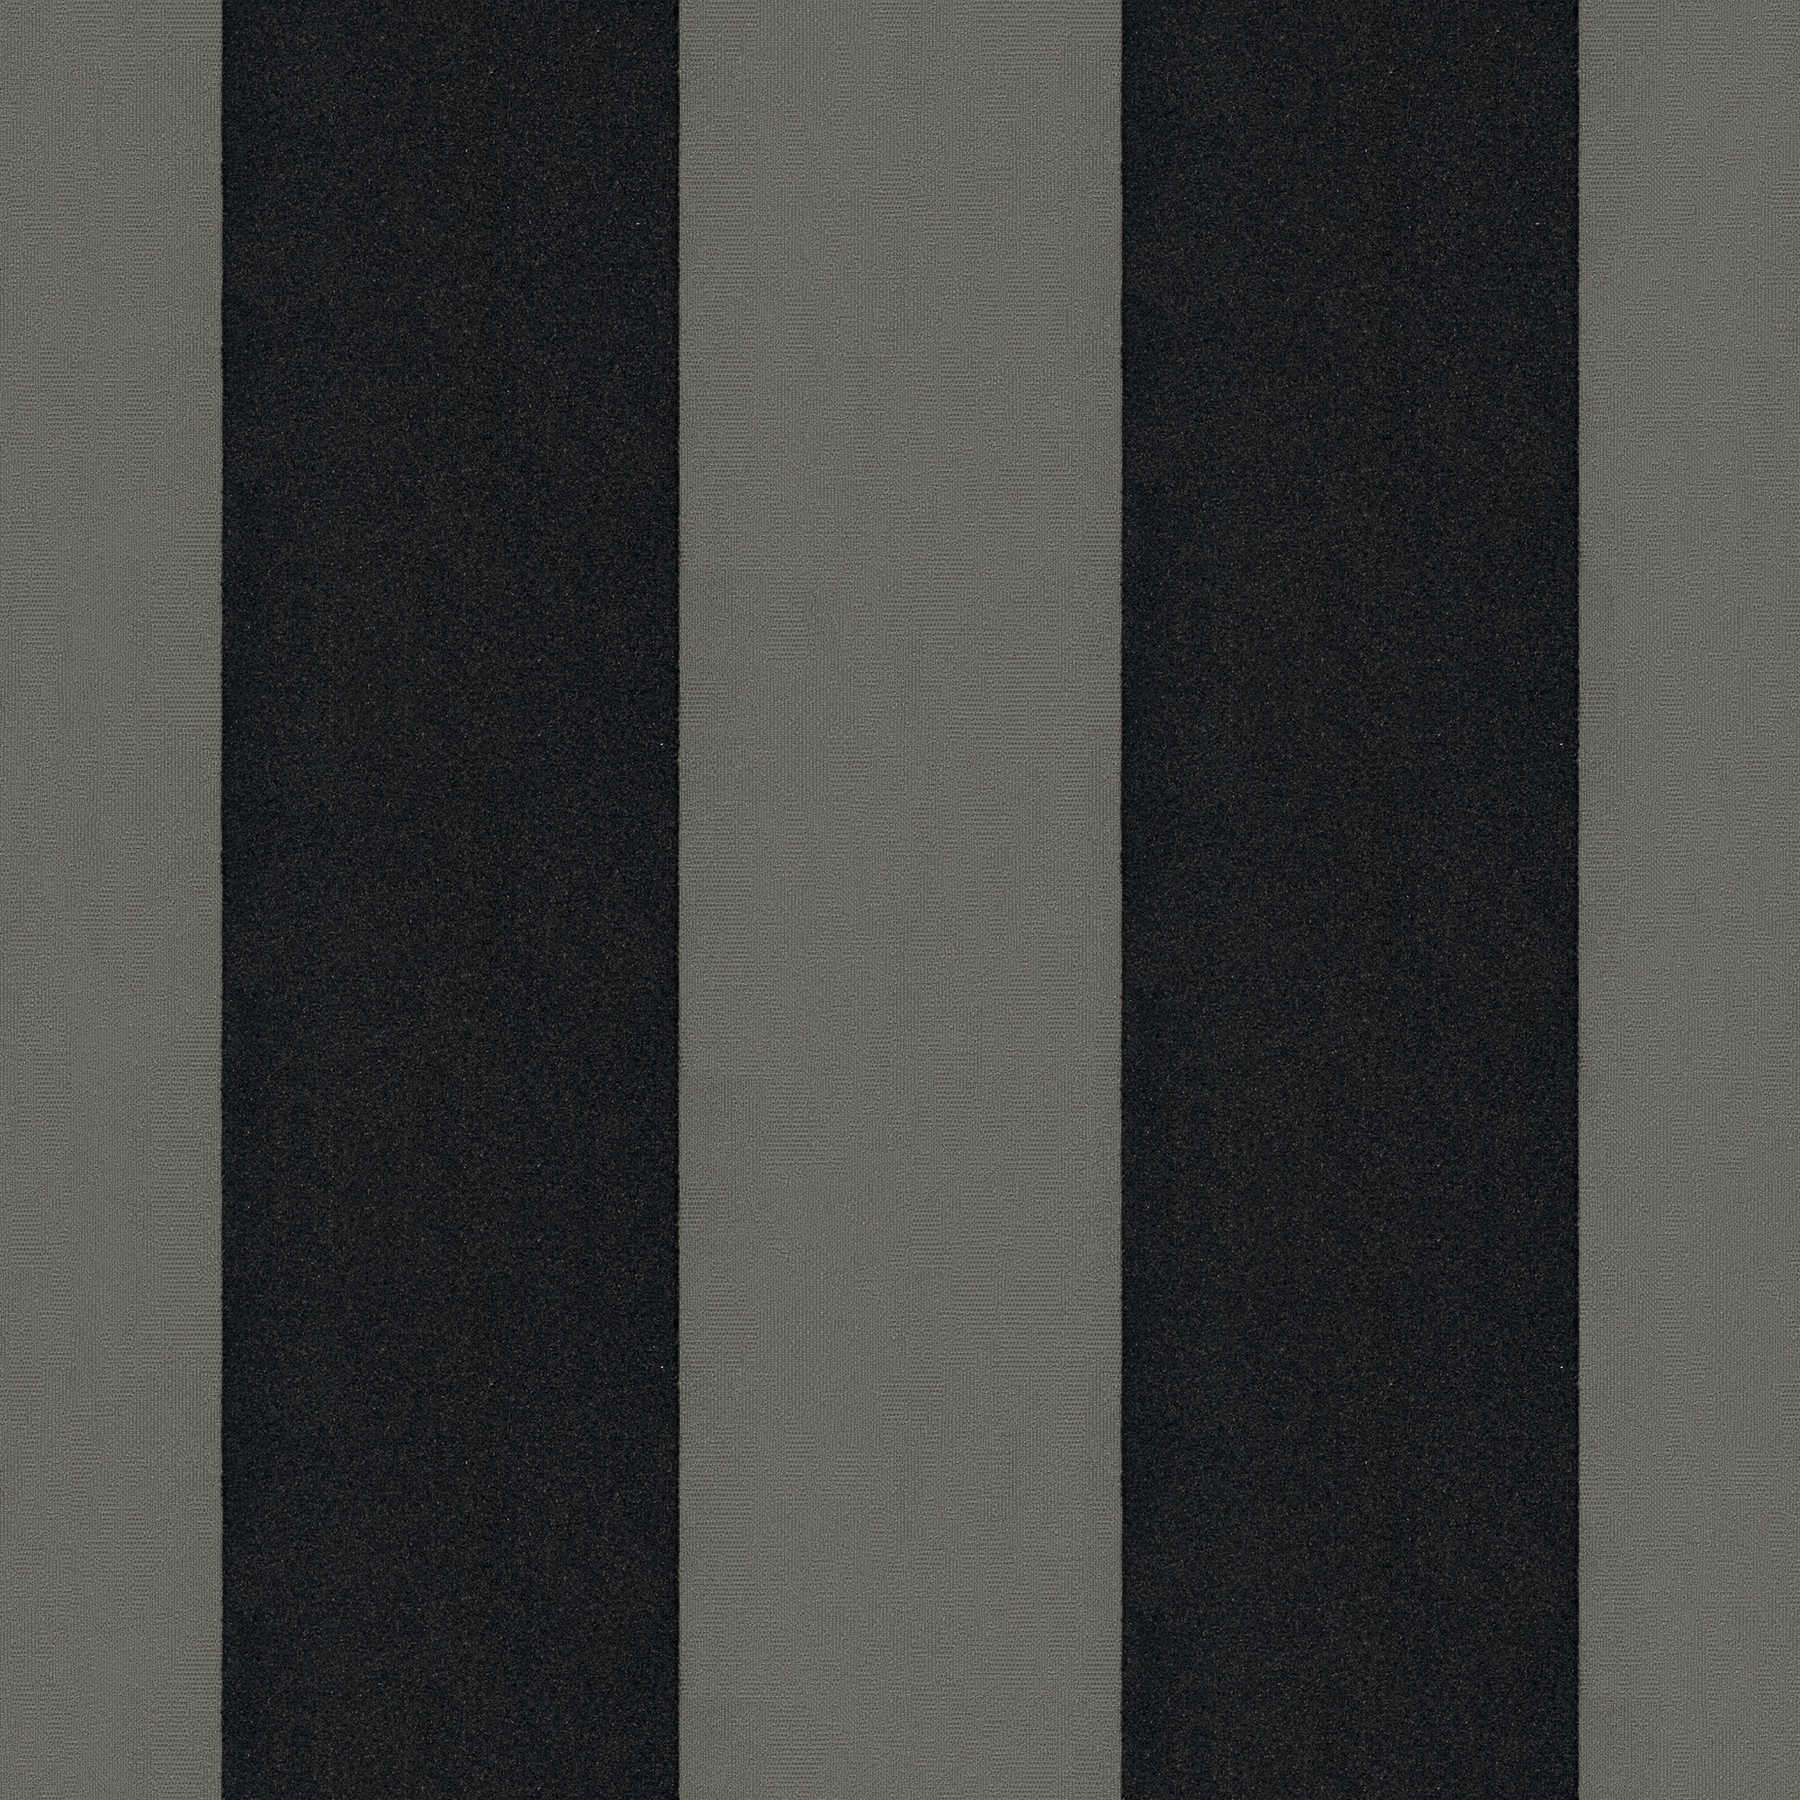         Black wallpaper block stripes & metallic effect
    